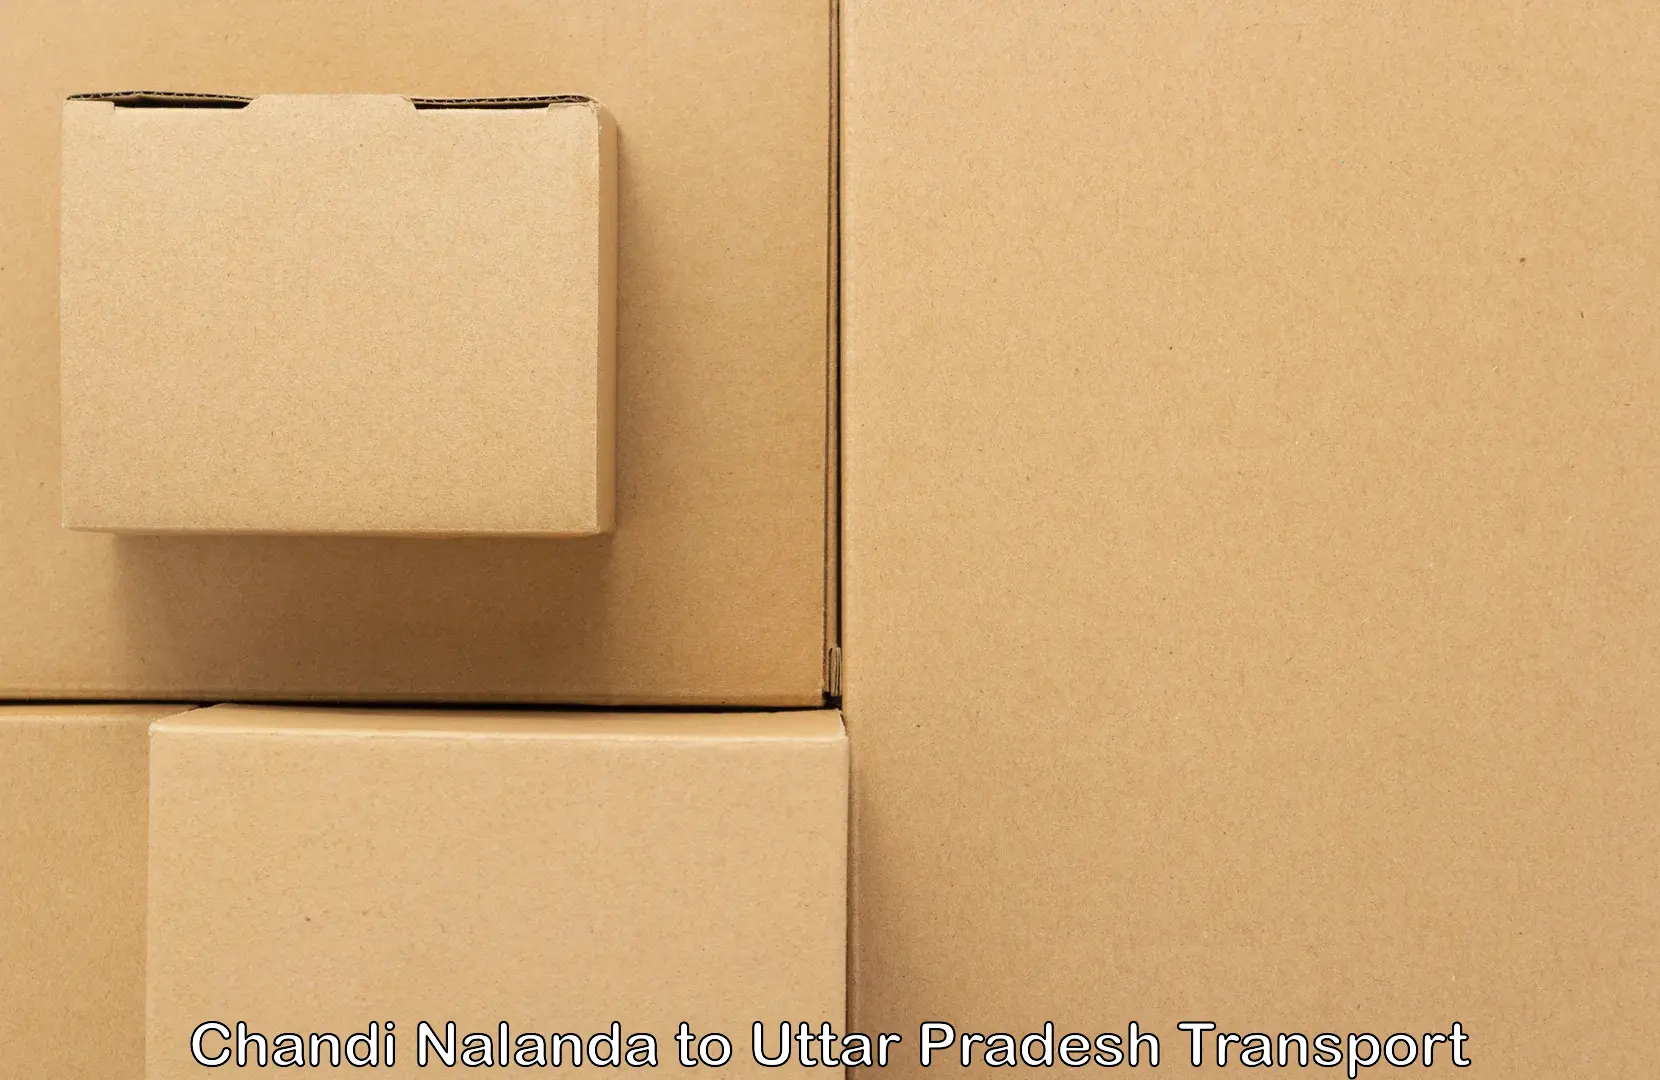 Goods delivery service Chandi Nalanda to Lalitpur